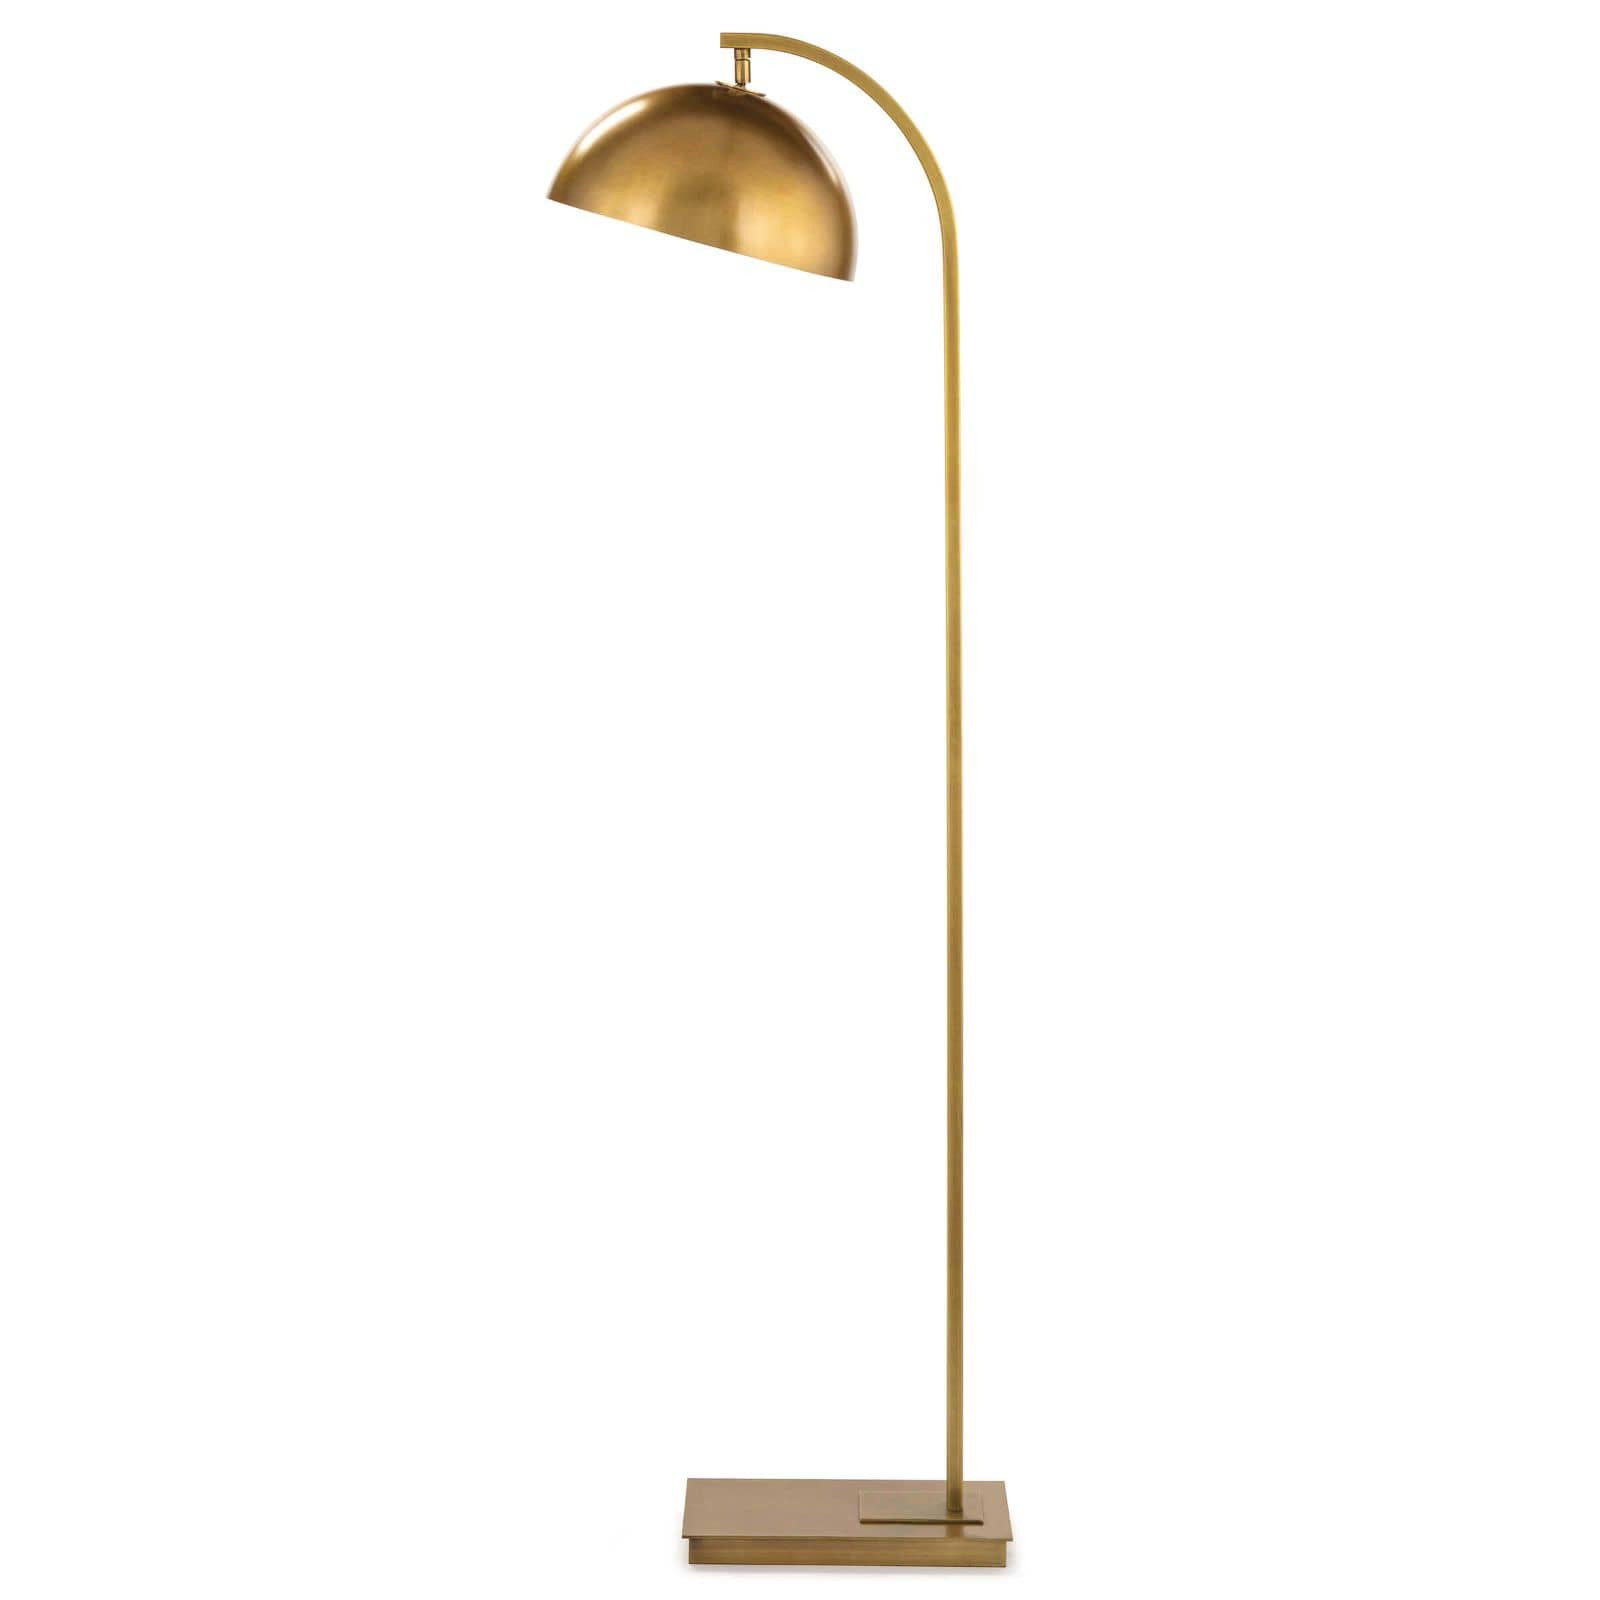 Maxstoke Brass Floor Lamp - Antique Brass